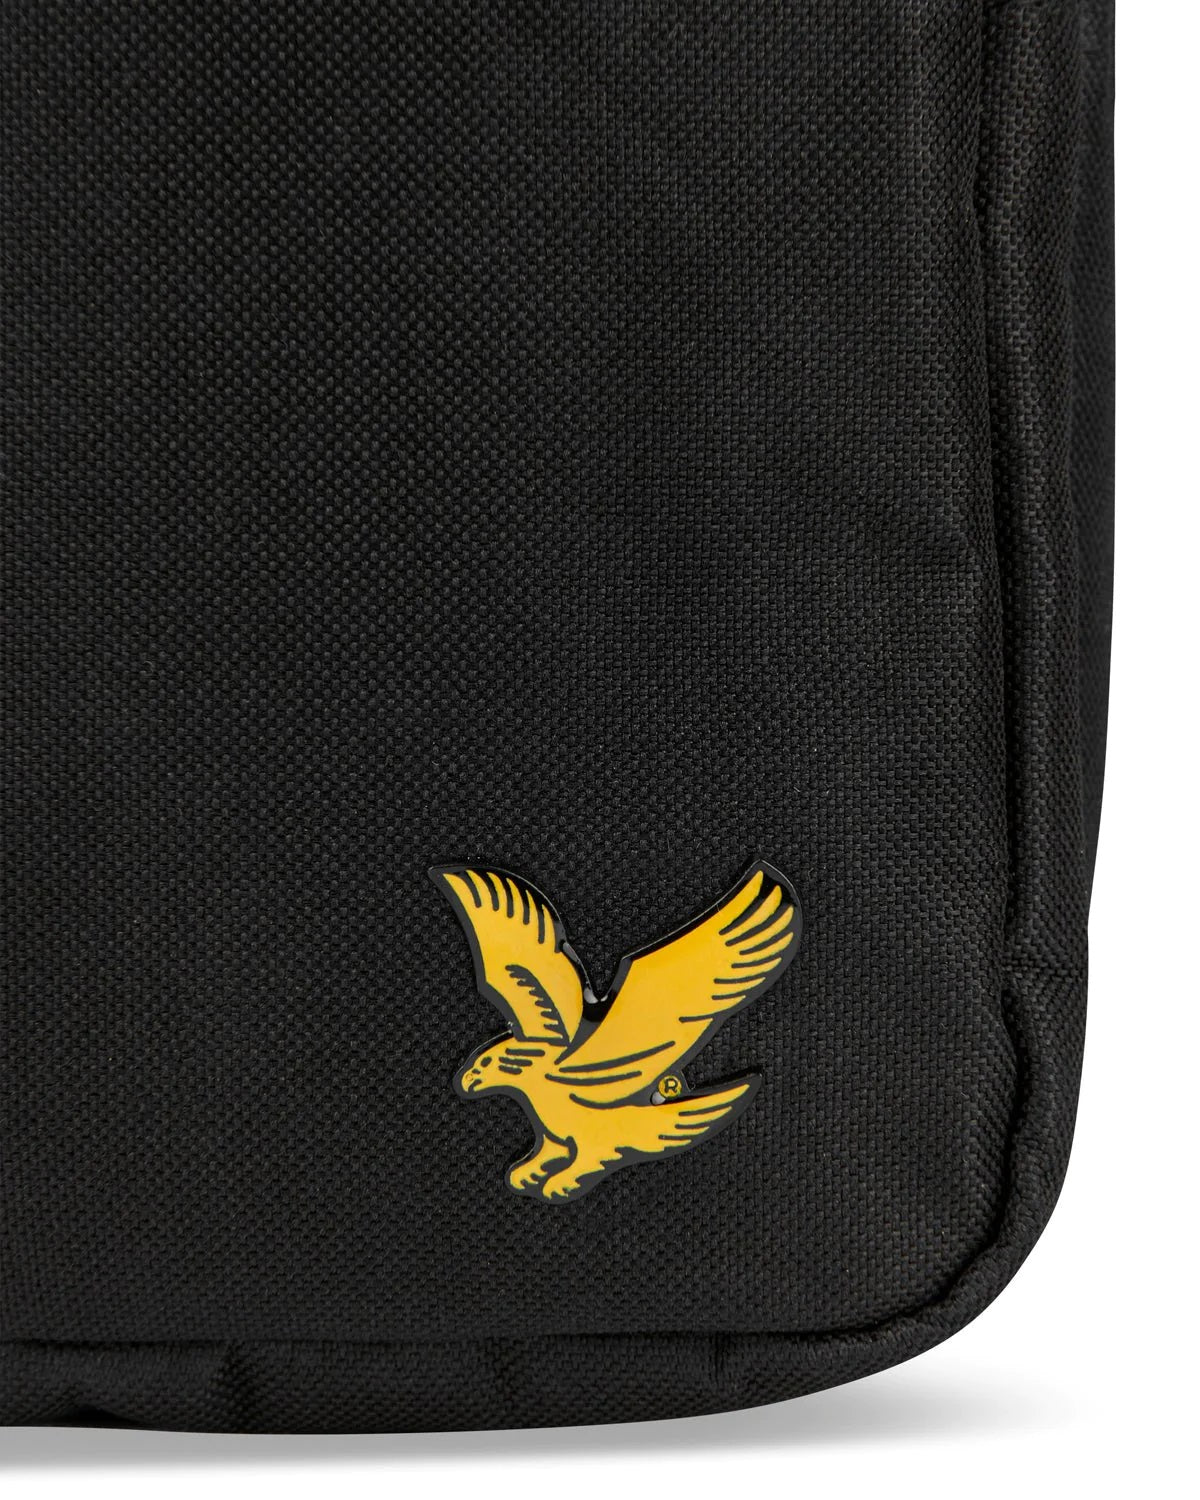 Lyle & Scott Reporter Bag With Golden Eagle Logo, 02, Ba1402A, True Black